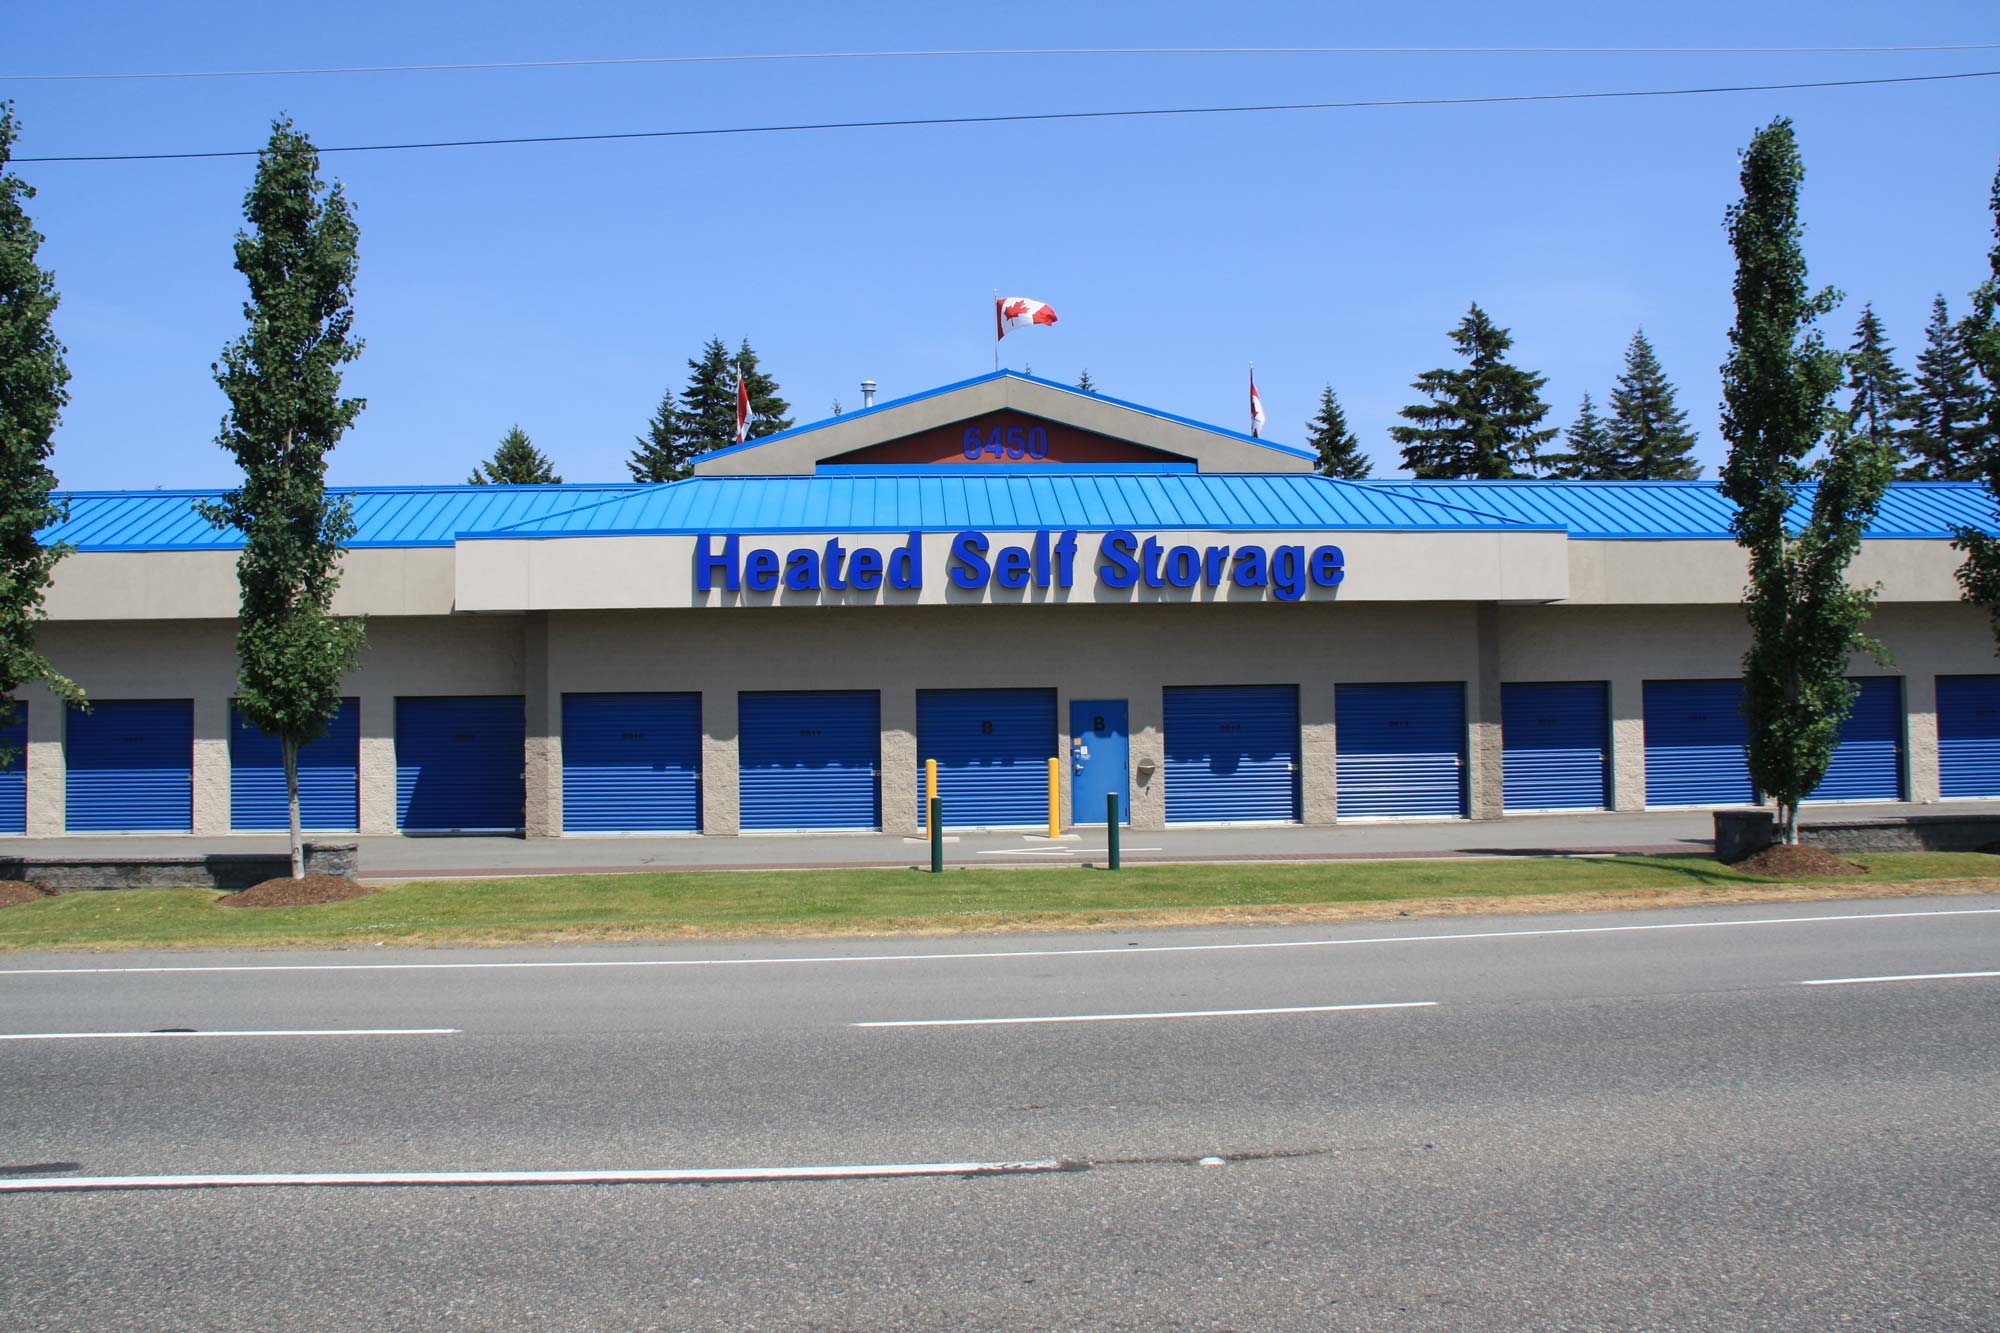 Exterior view of Budget Self Storage in Nanaimo, British Columbia. 